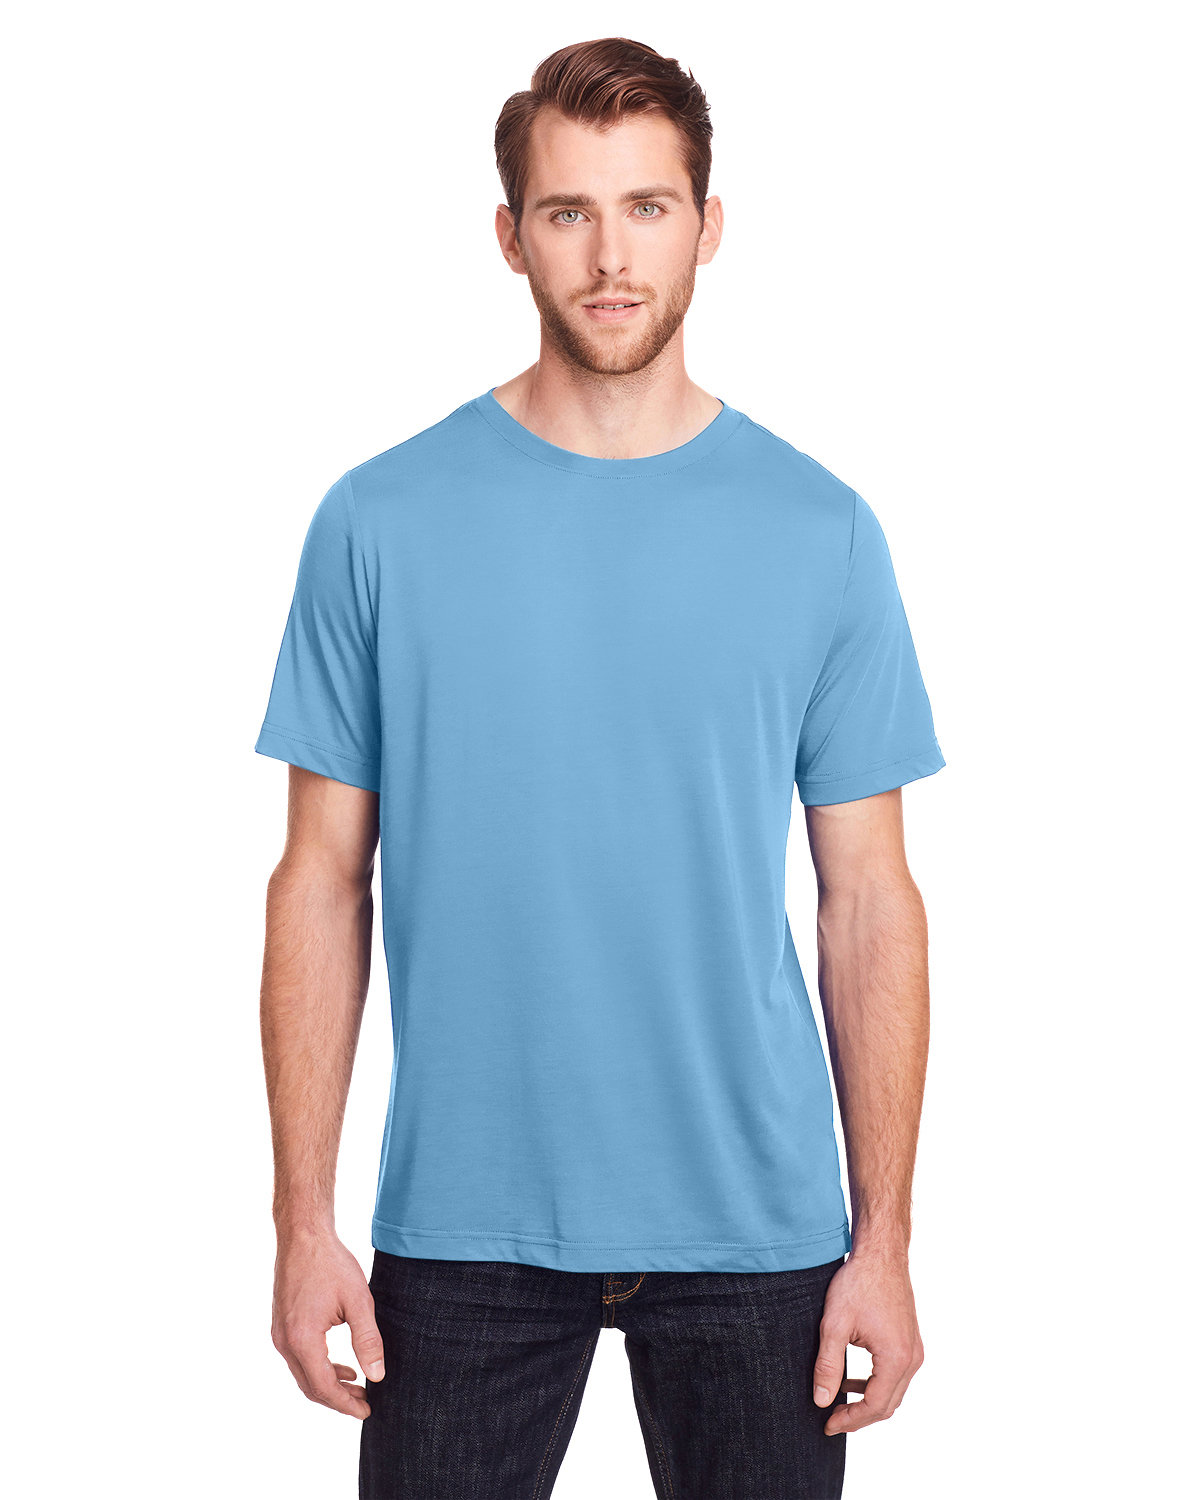 CORE365 Adult Fusion ChromaSoft Performance T-Shirt COLUMBIA BLUE 